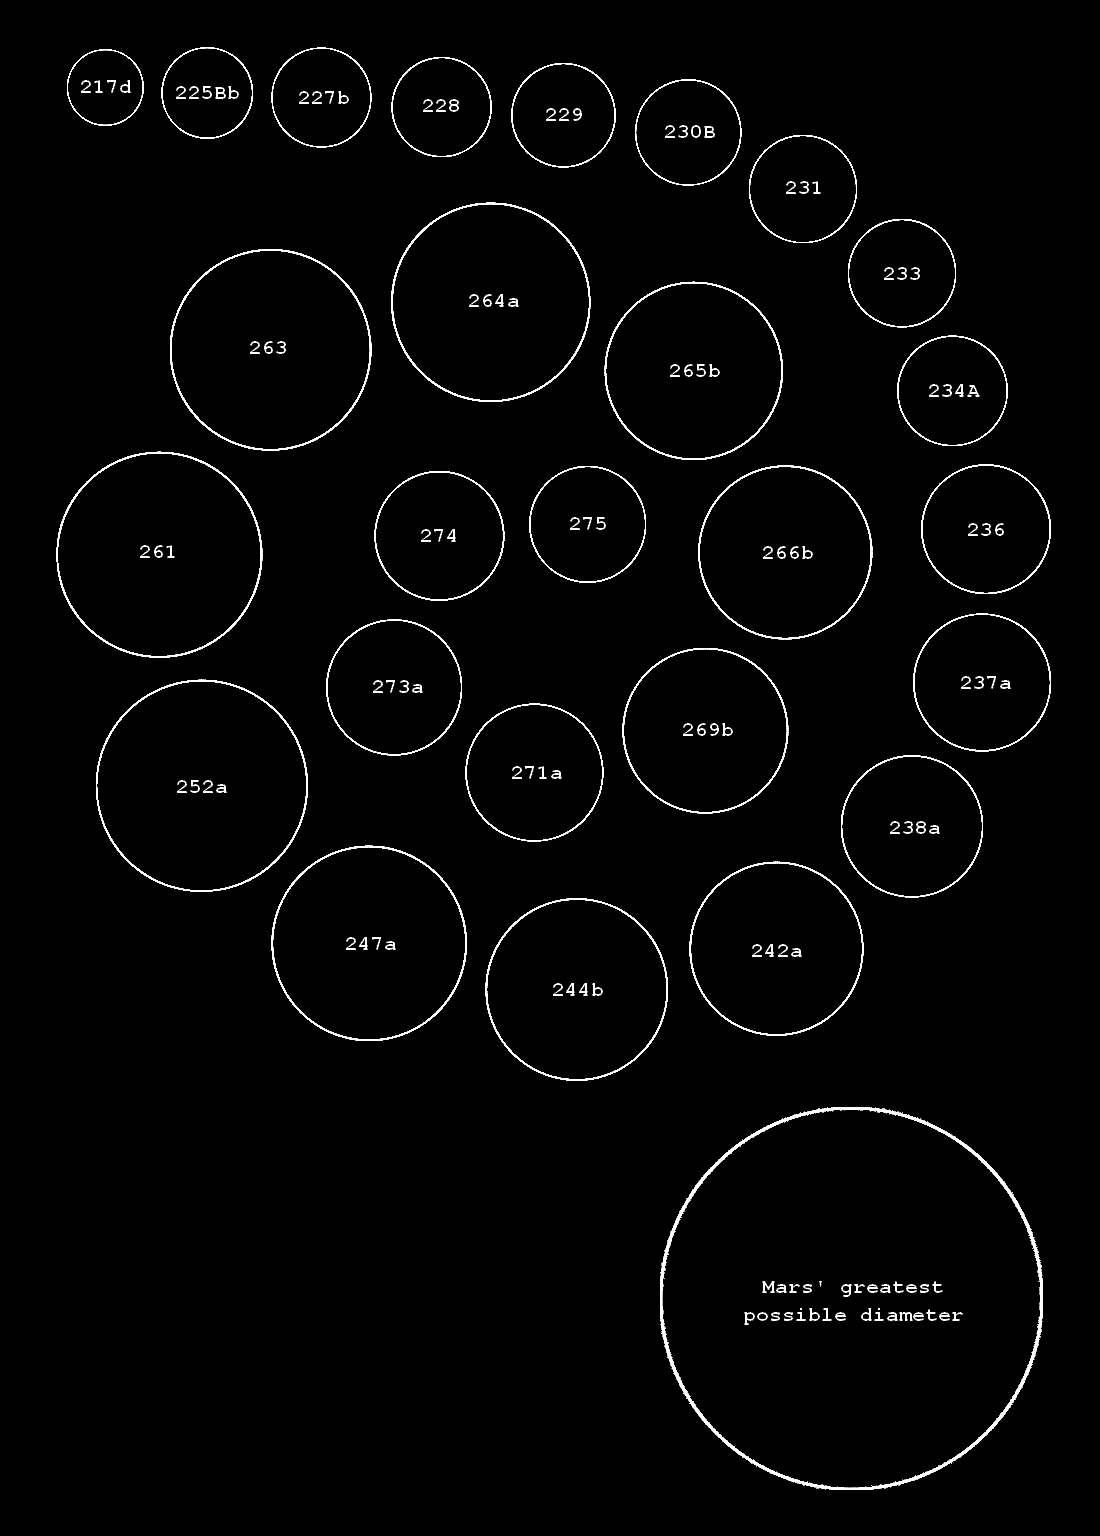 Mars 2011-12 relative apparent diameter chart